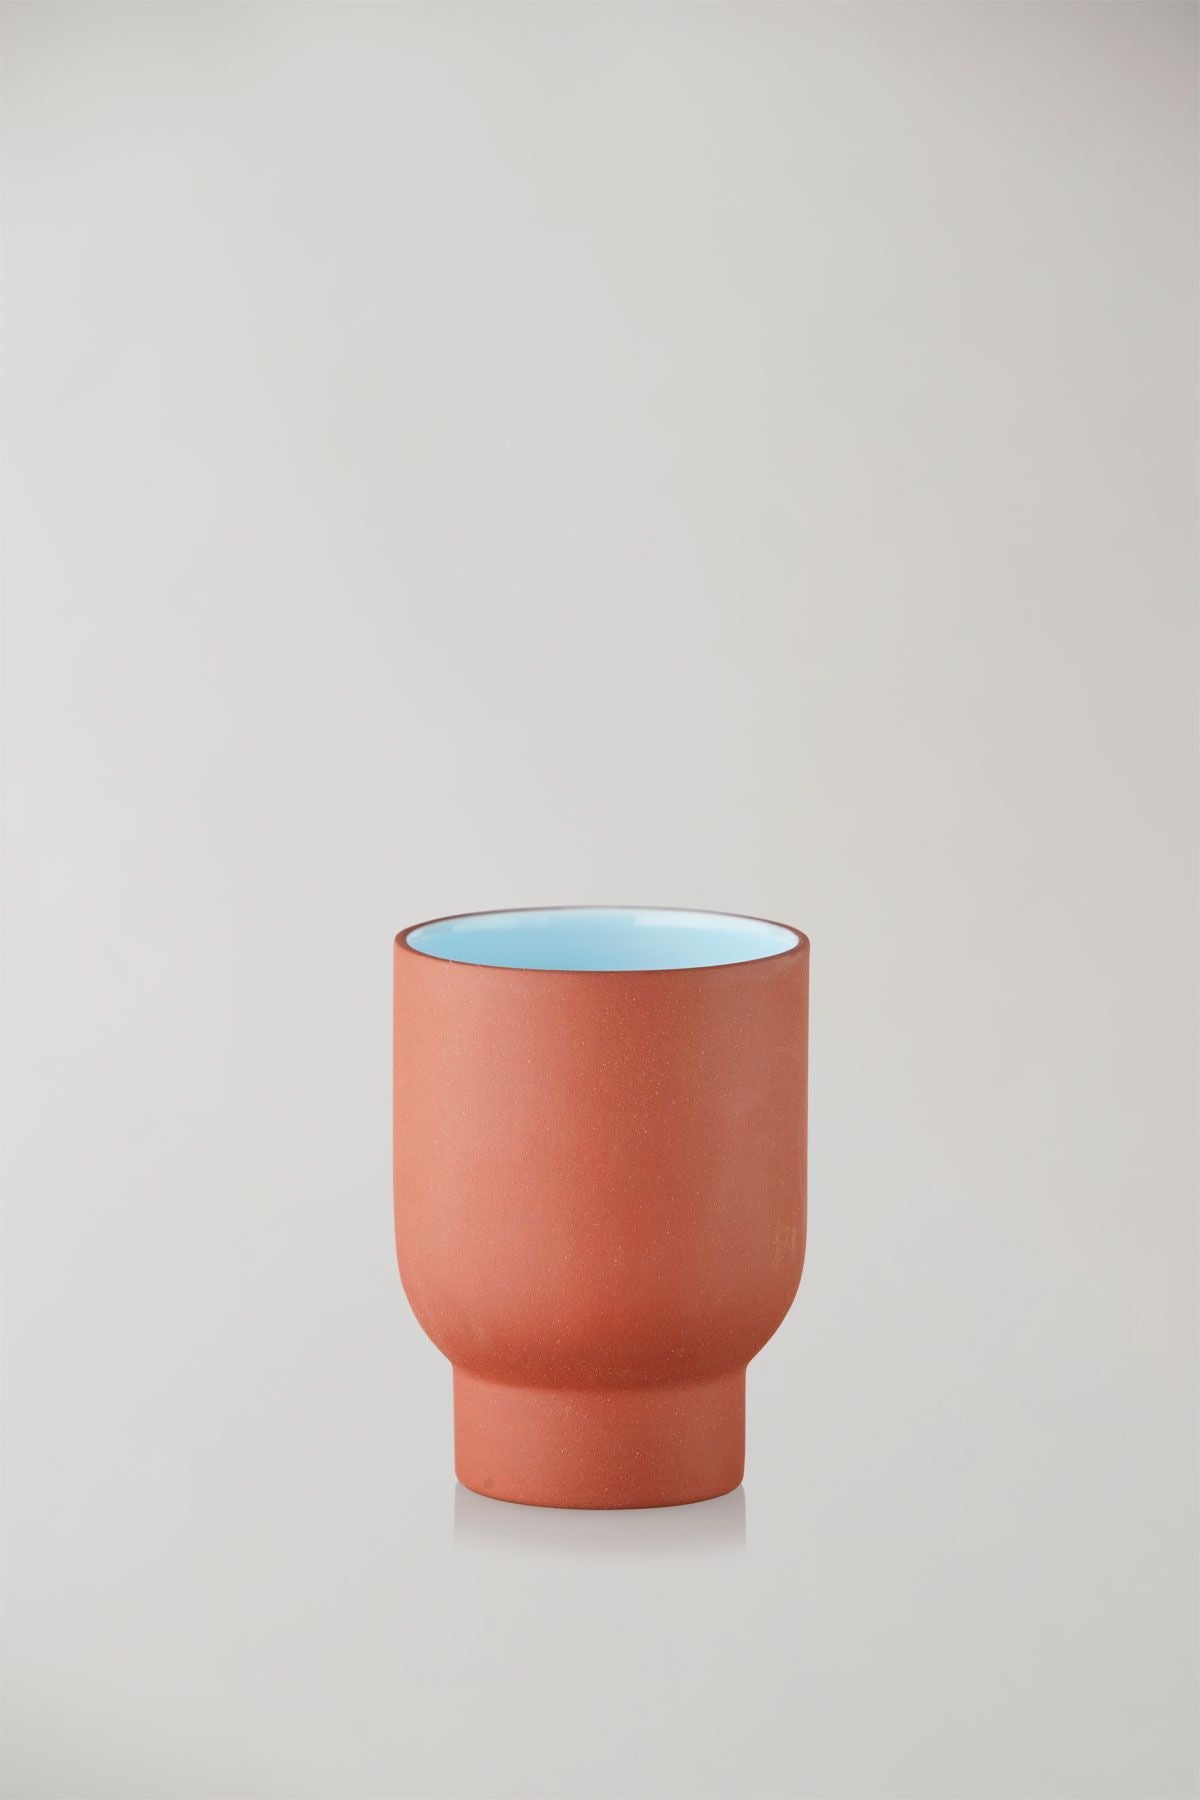 Studio About Clayware -sæt med 2 kopper, terracotta/blå